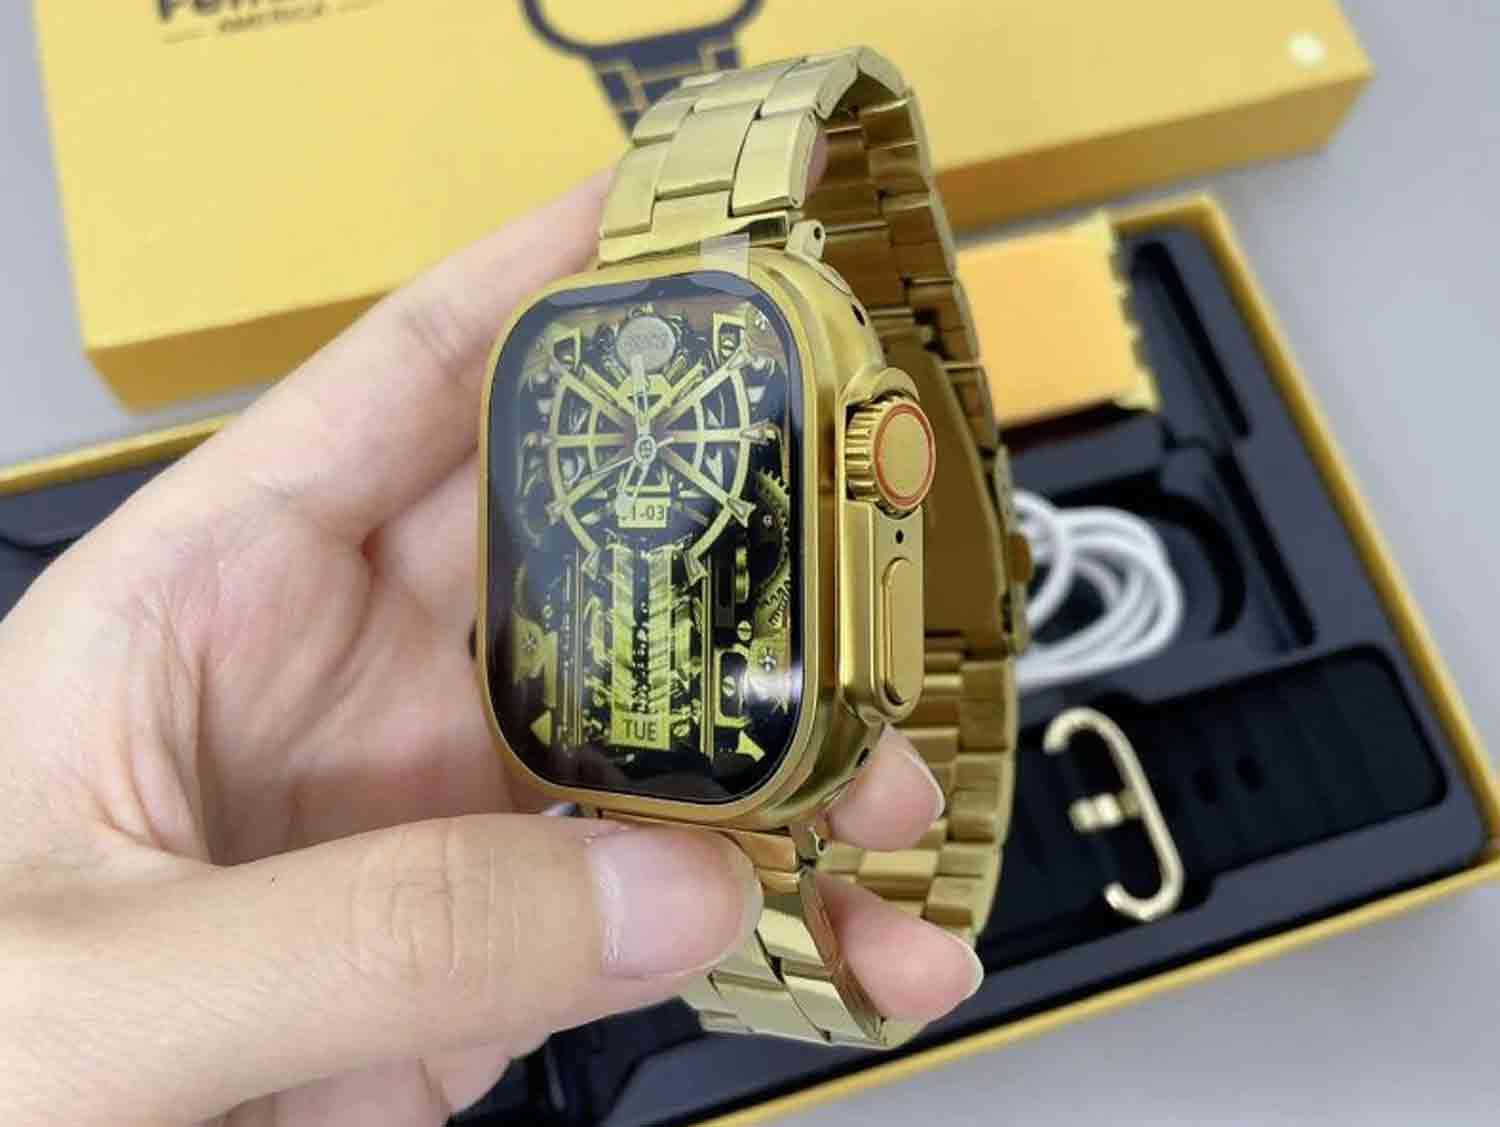 Fendior G9 Ultra Max Gold Smart Watch